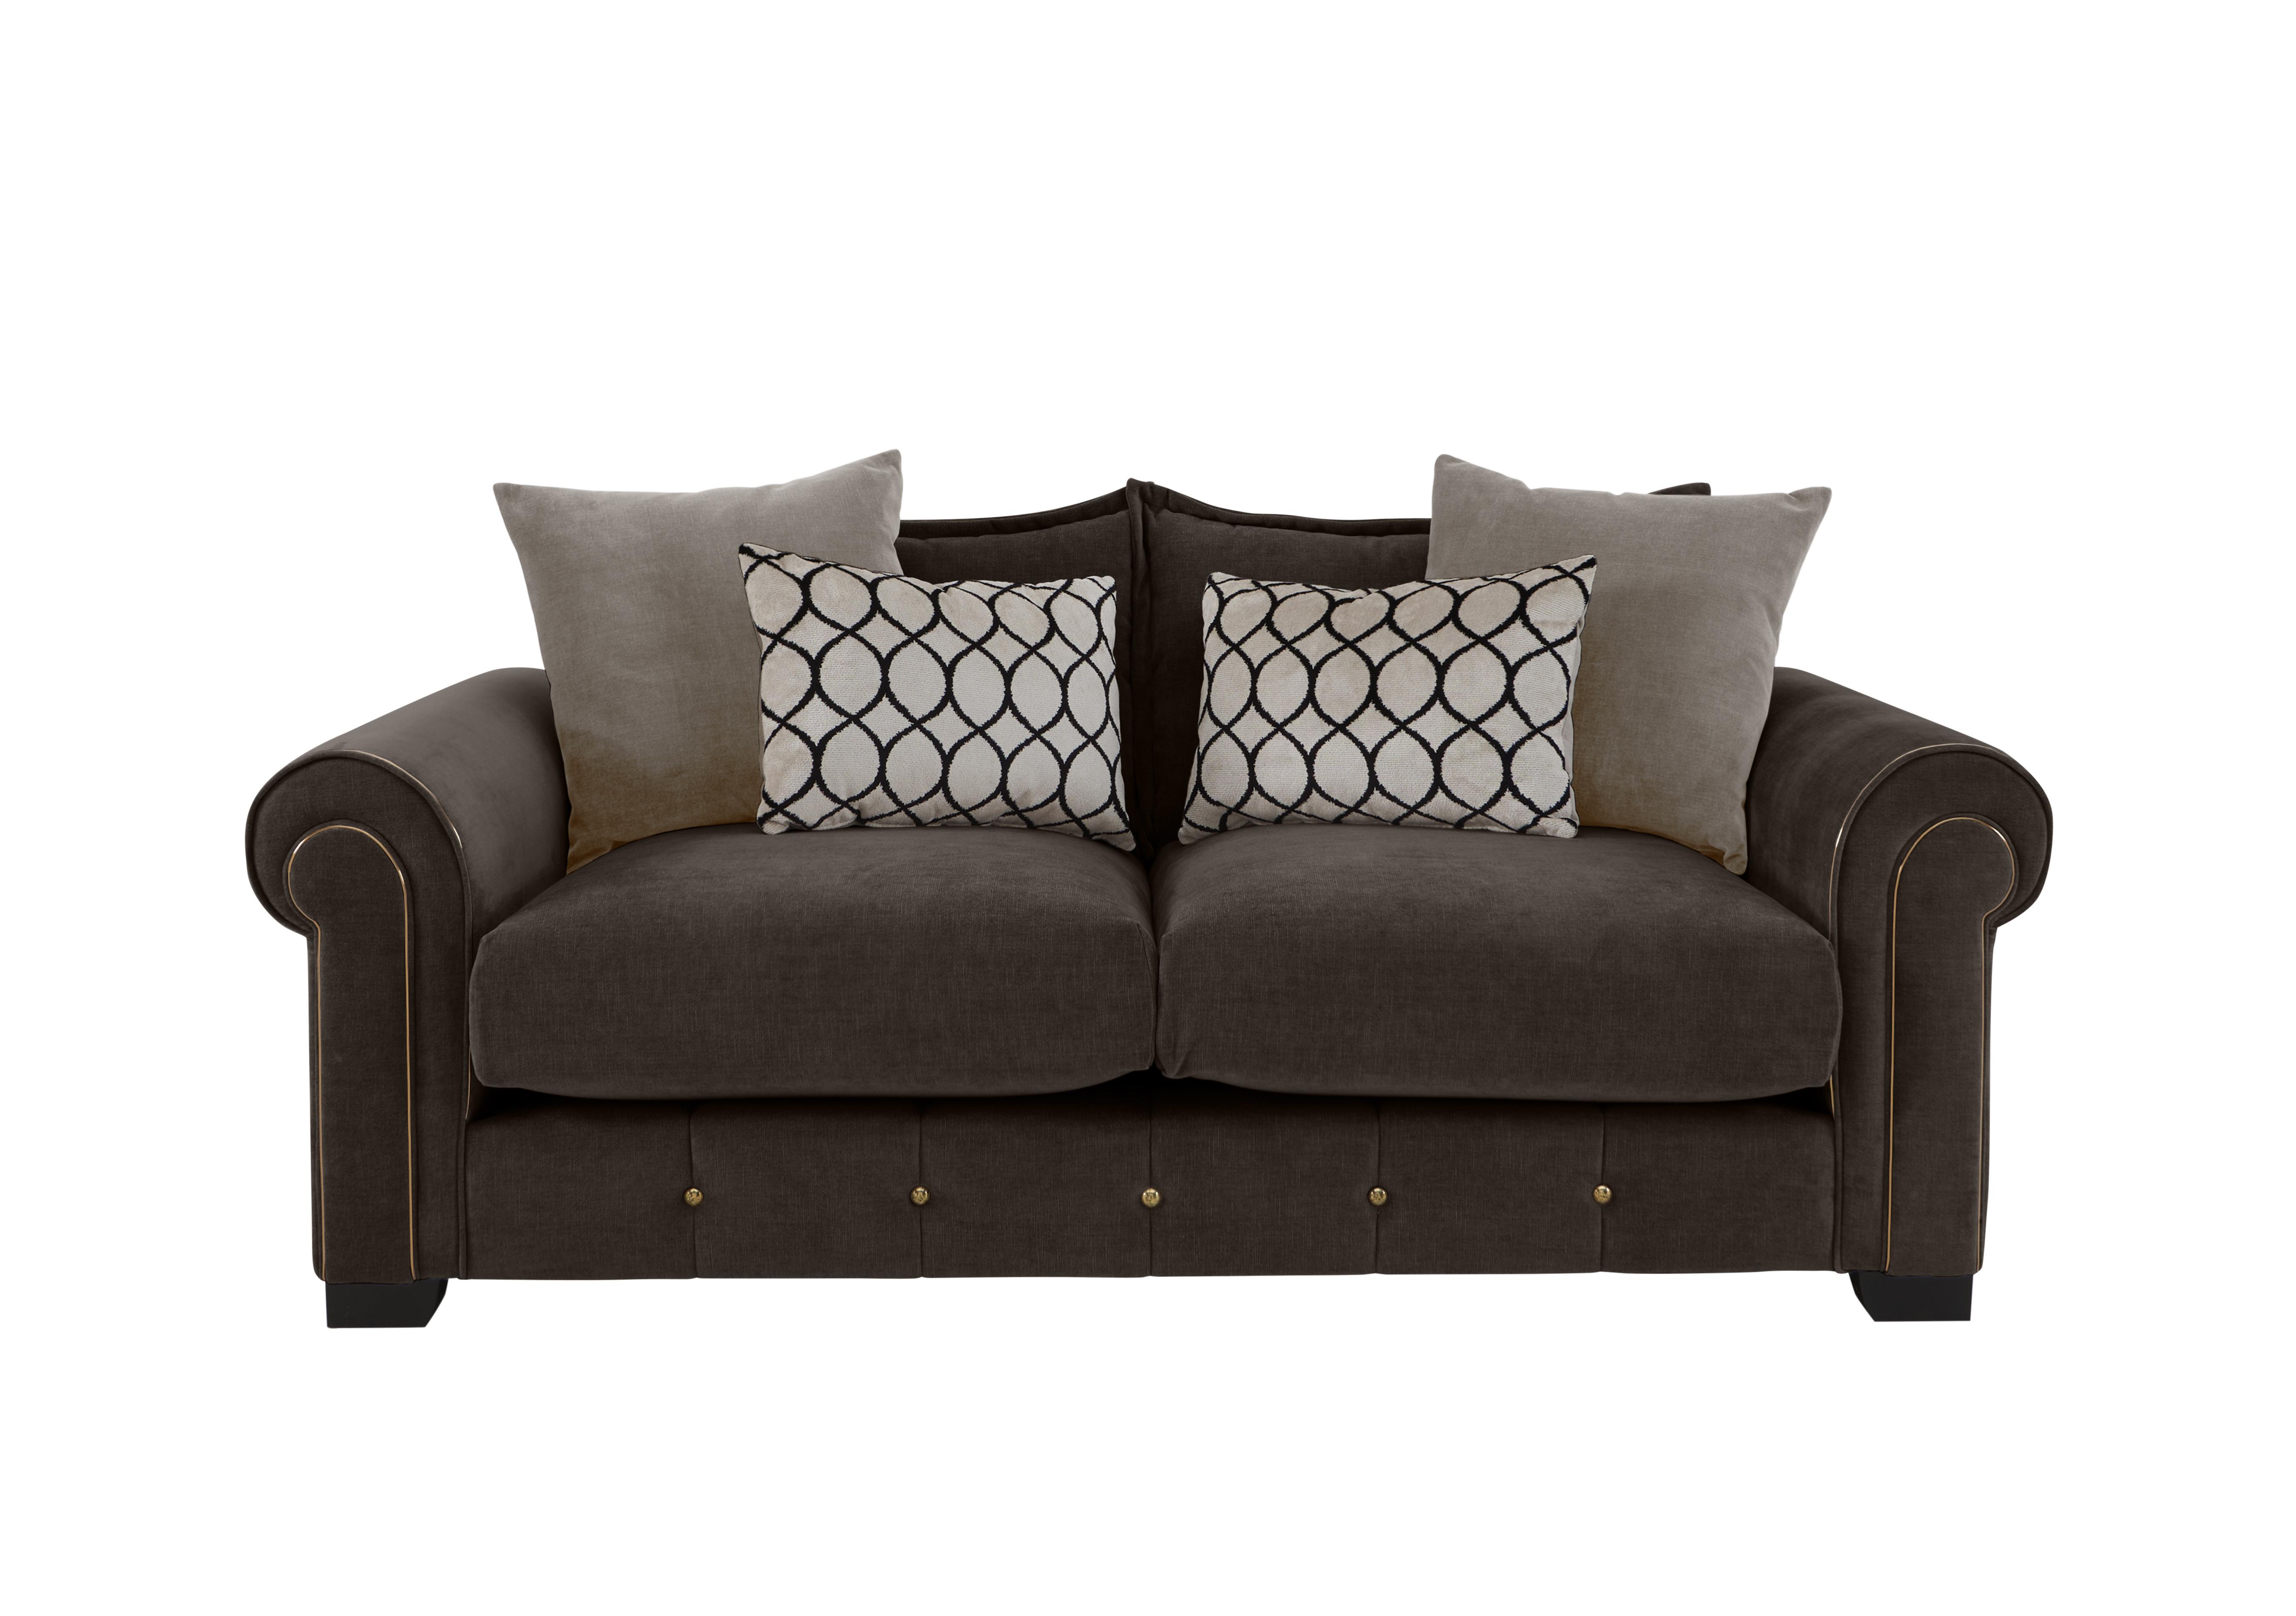 Sumptuous 3 Seater Fabric Sofa in Chamonix Mocha Dk/Gold on Furniture Village